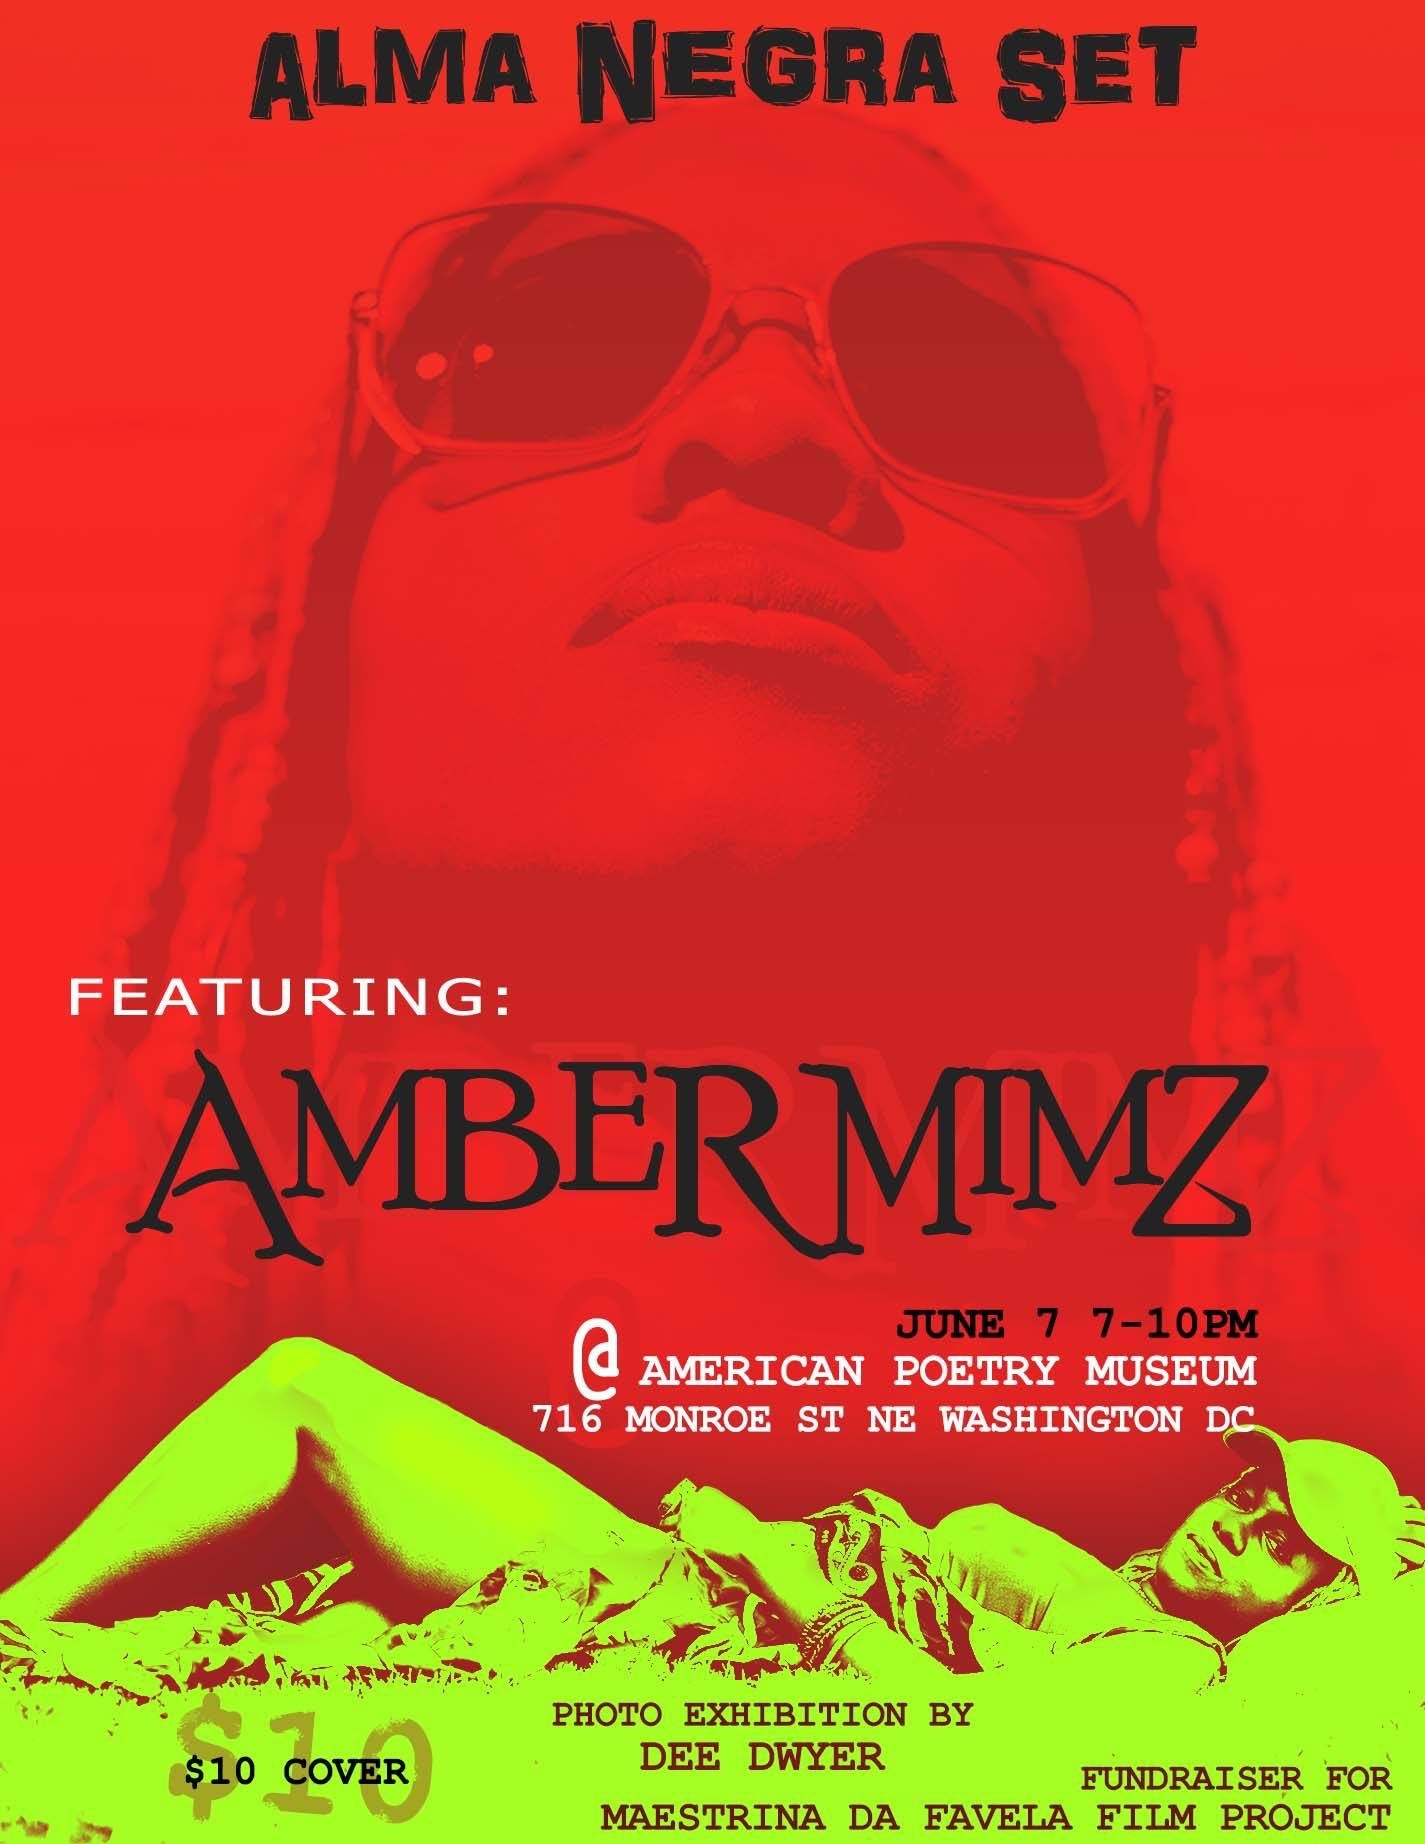 American Poetry Museum: Alma Negra Sets - Amber Mimz